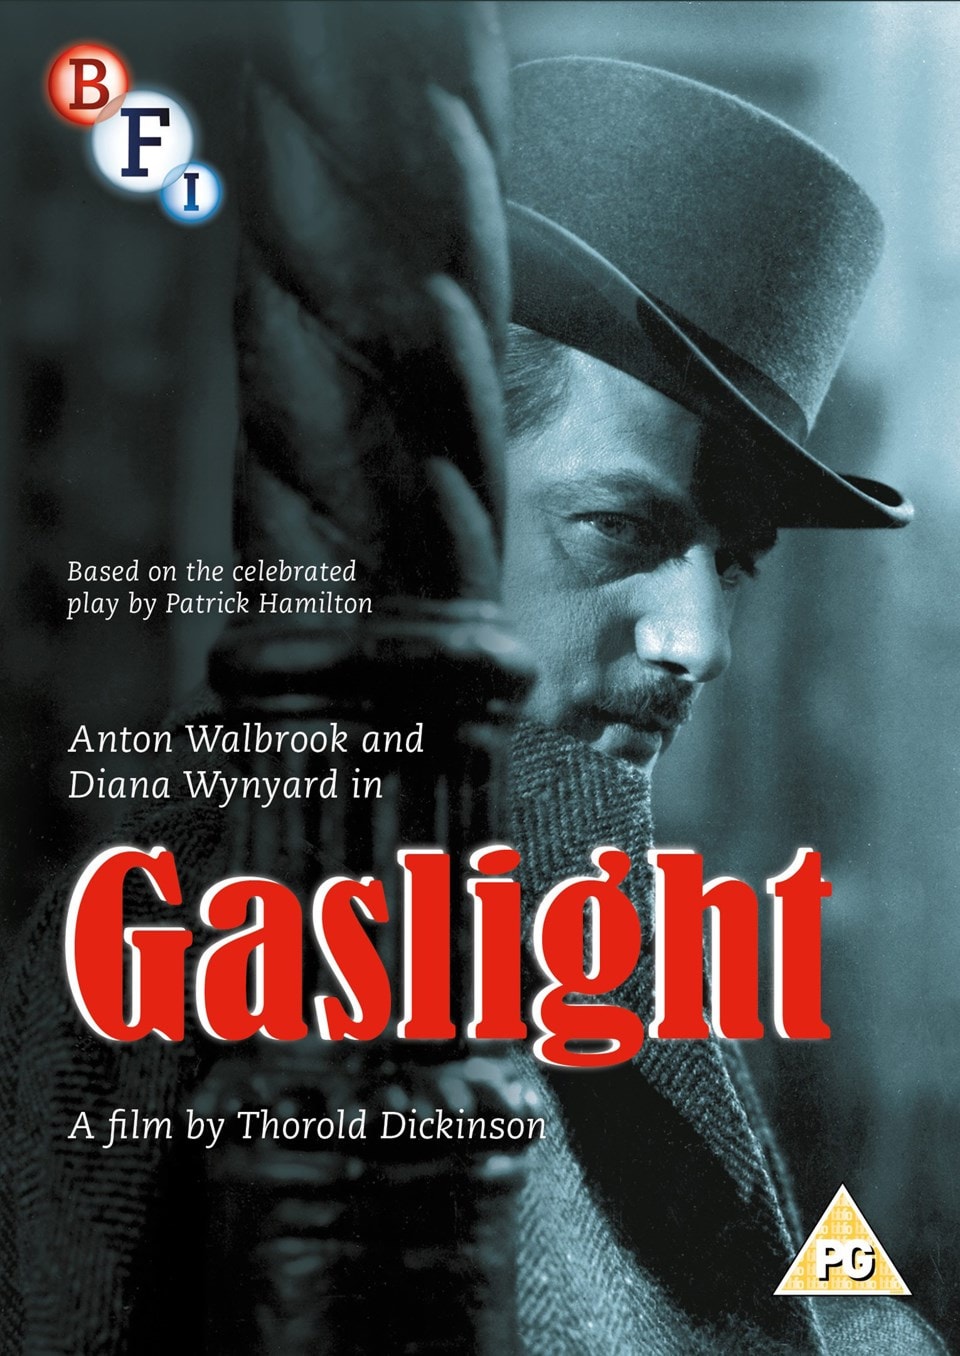 movie gaslight 2022